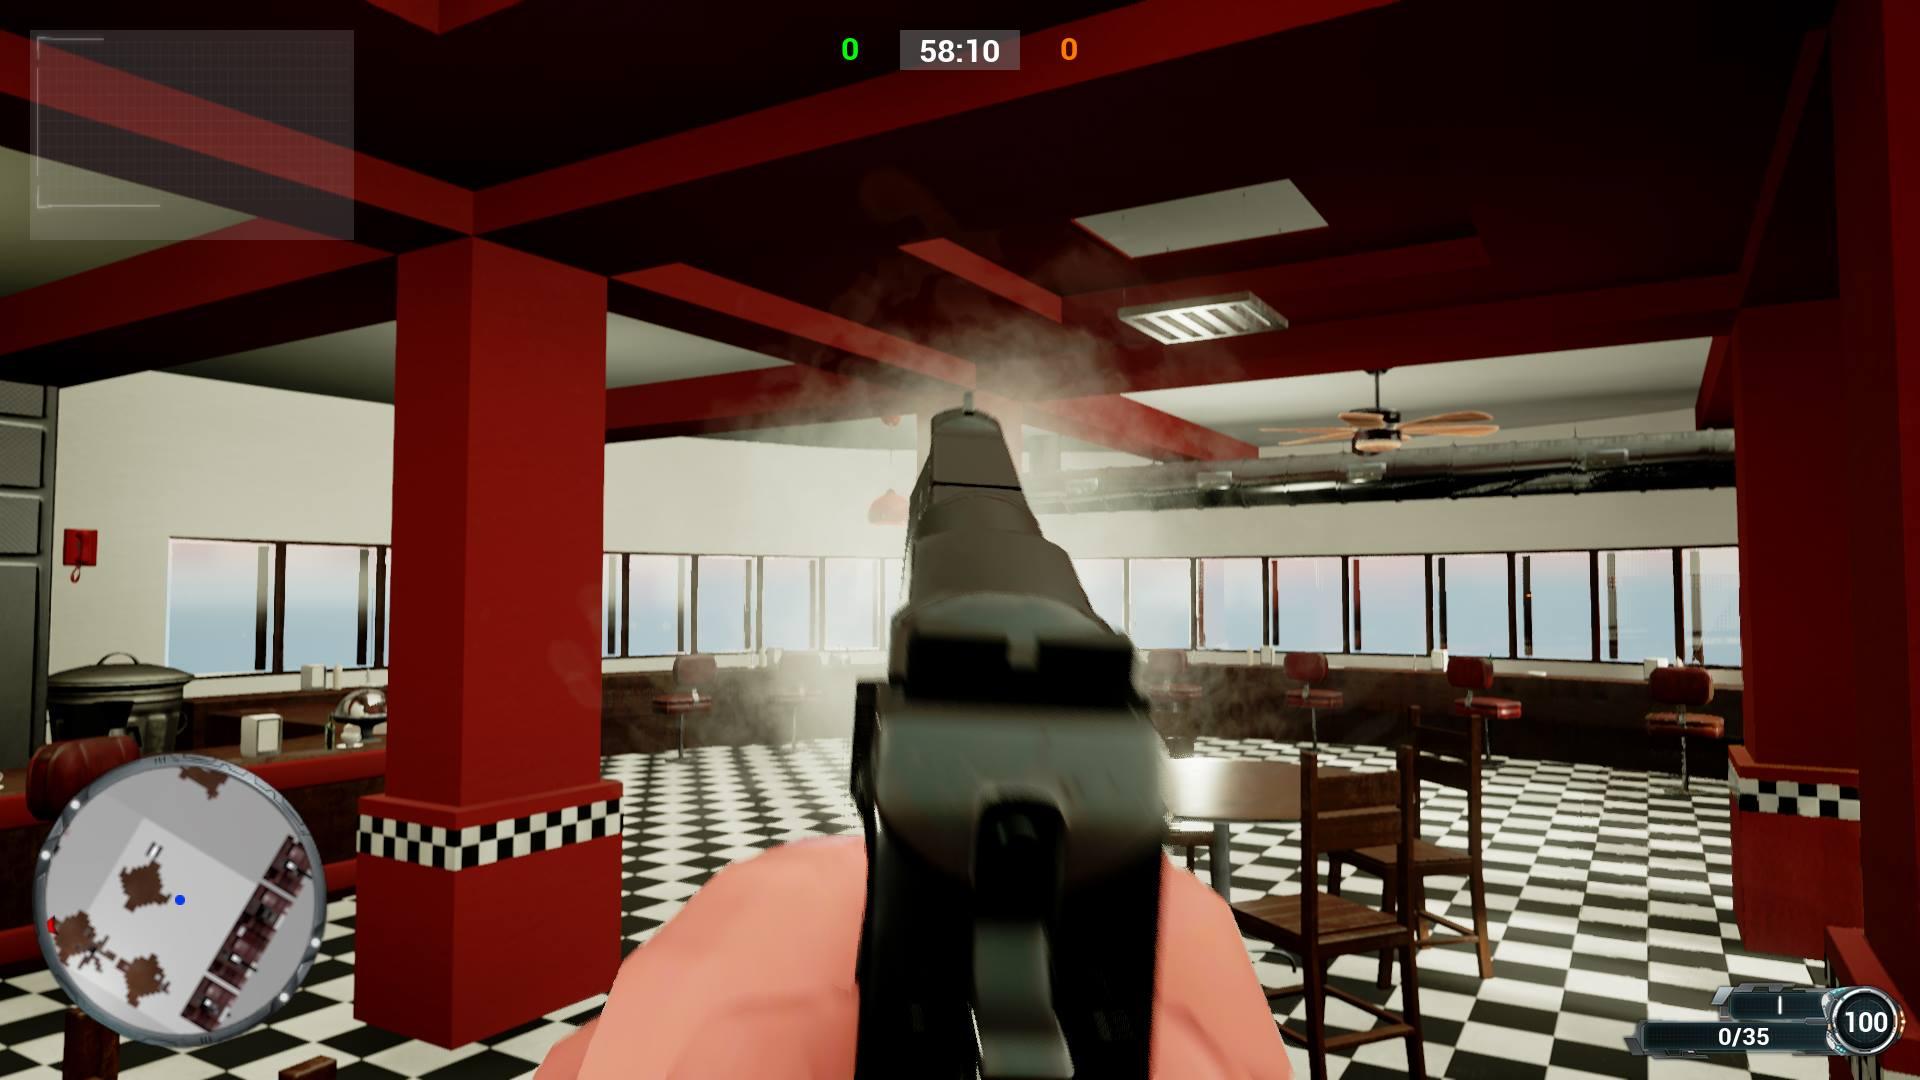 Screenshot №2 from game Shot Shot Tactic